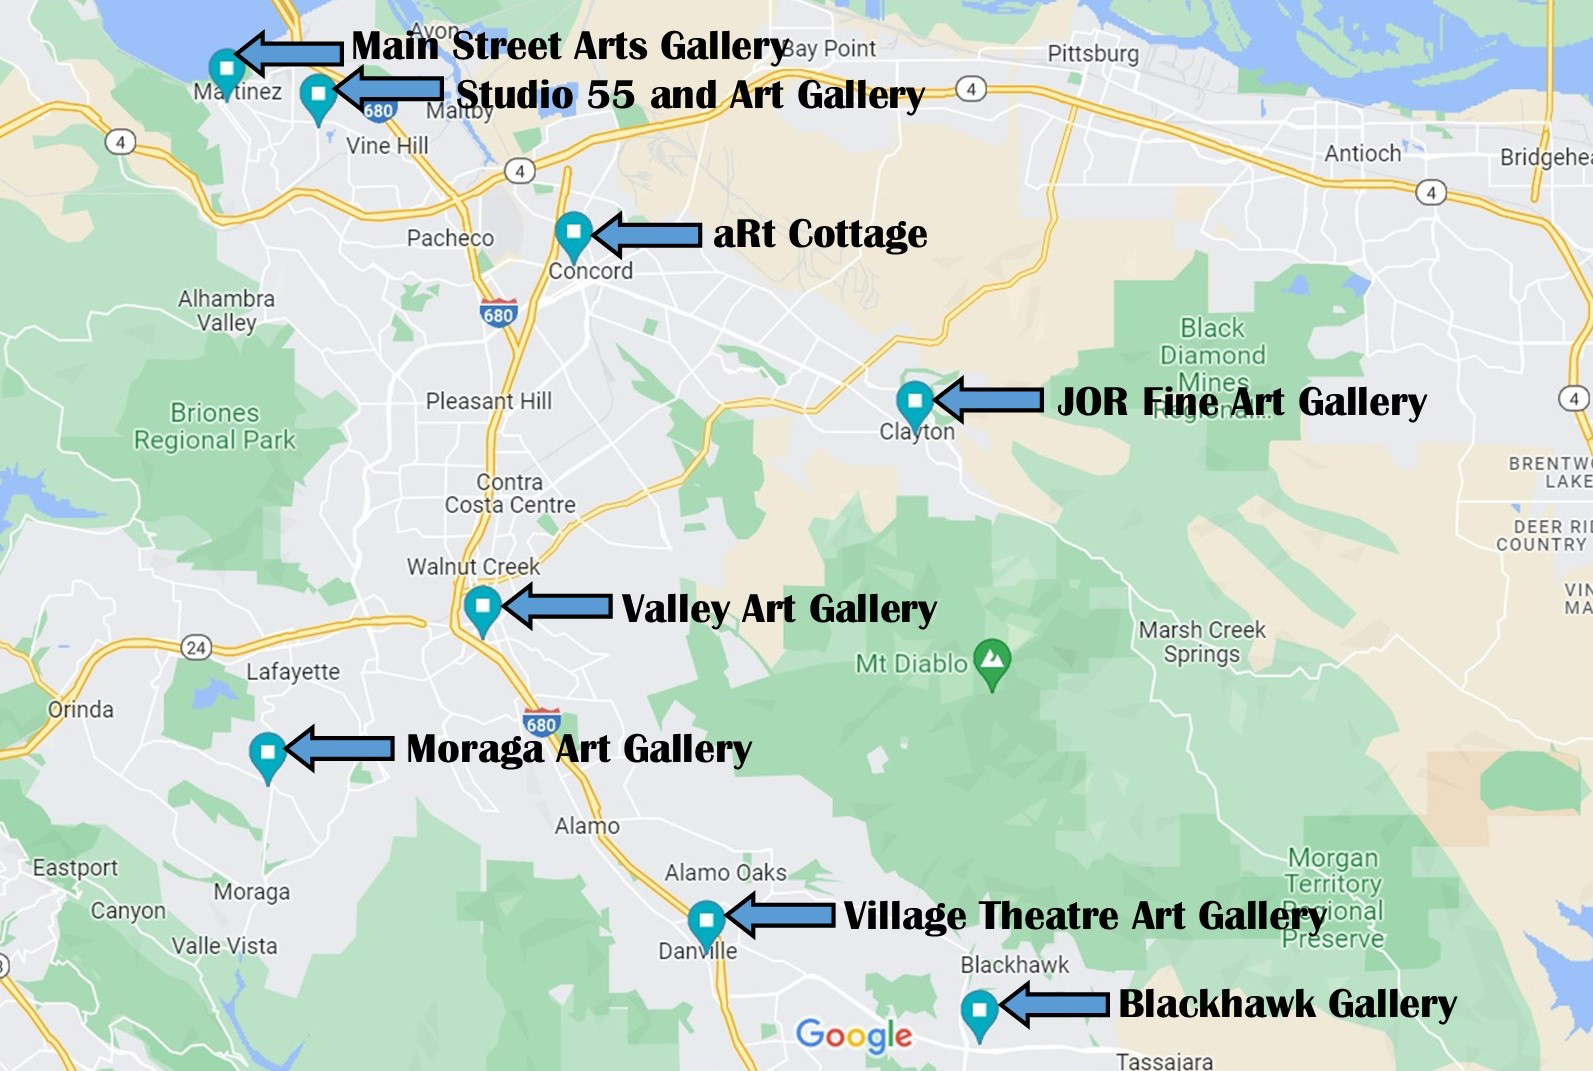 EBGT Map of 8 galleries (w)